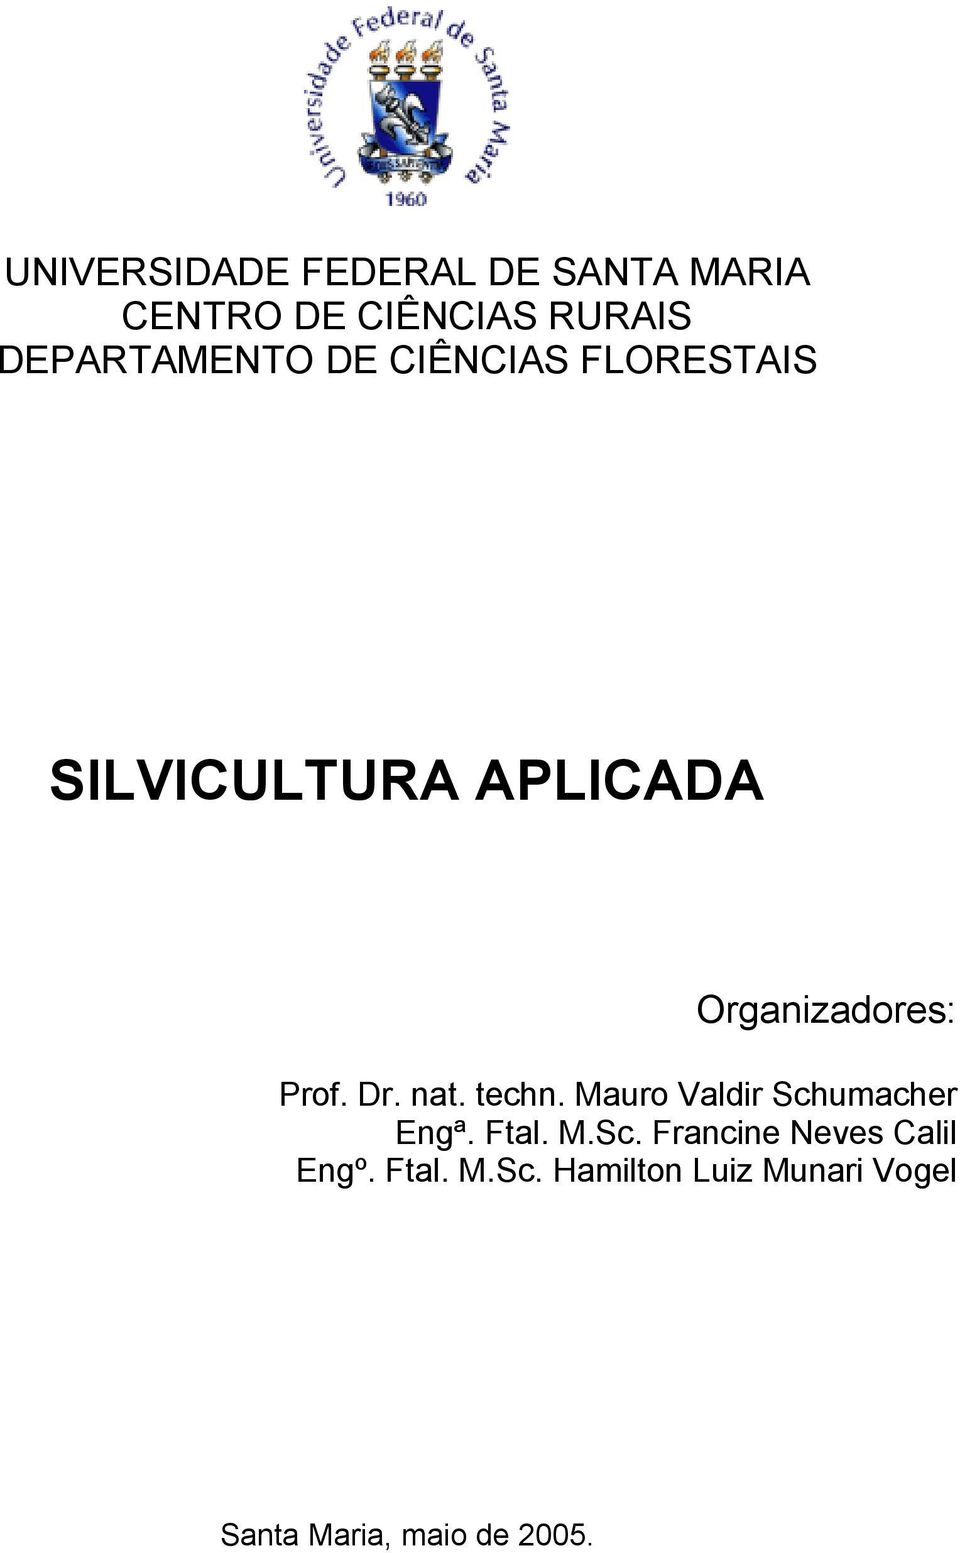 Prof. Dr. nat. techn. Mauro Valdir Schumacher Engª. Ftal. M.Sc. Francine Neves Calil Engº.